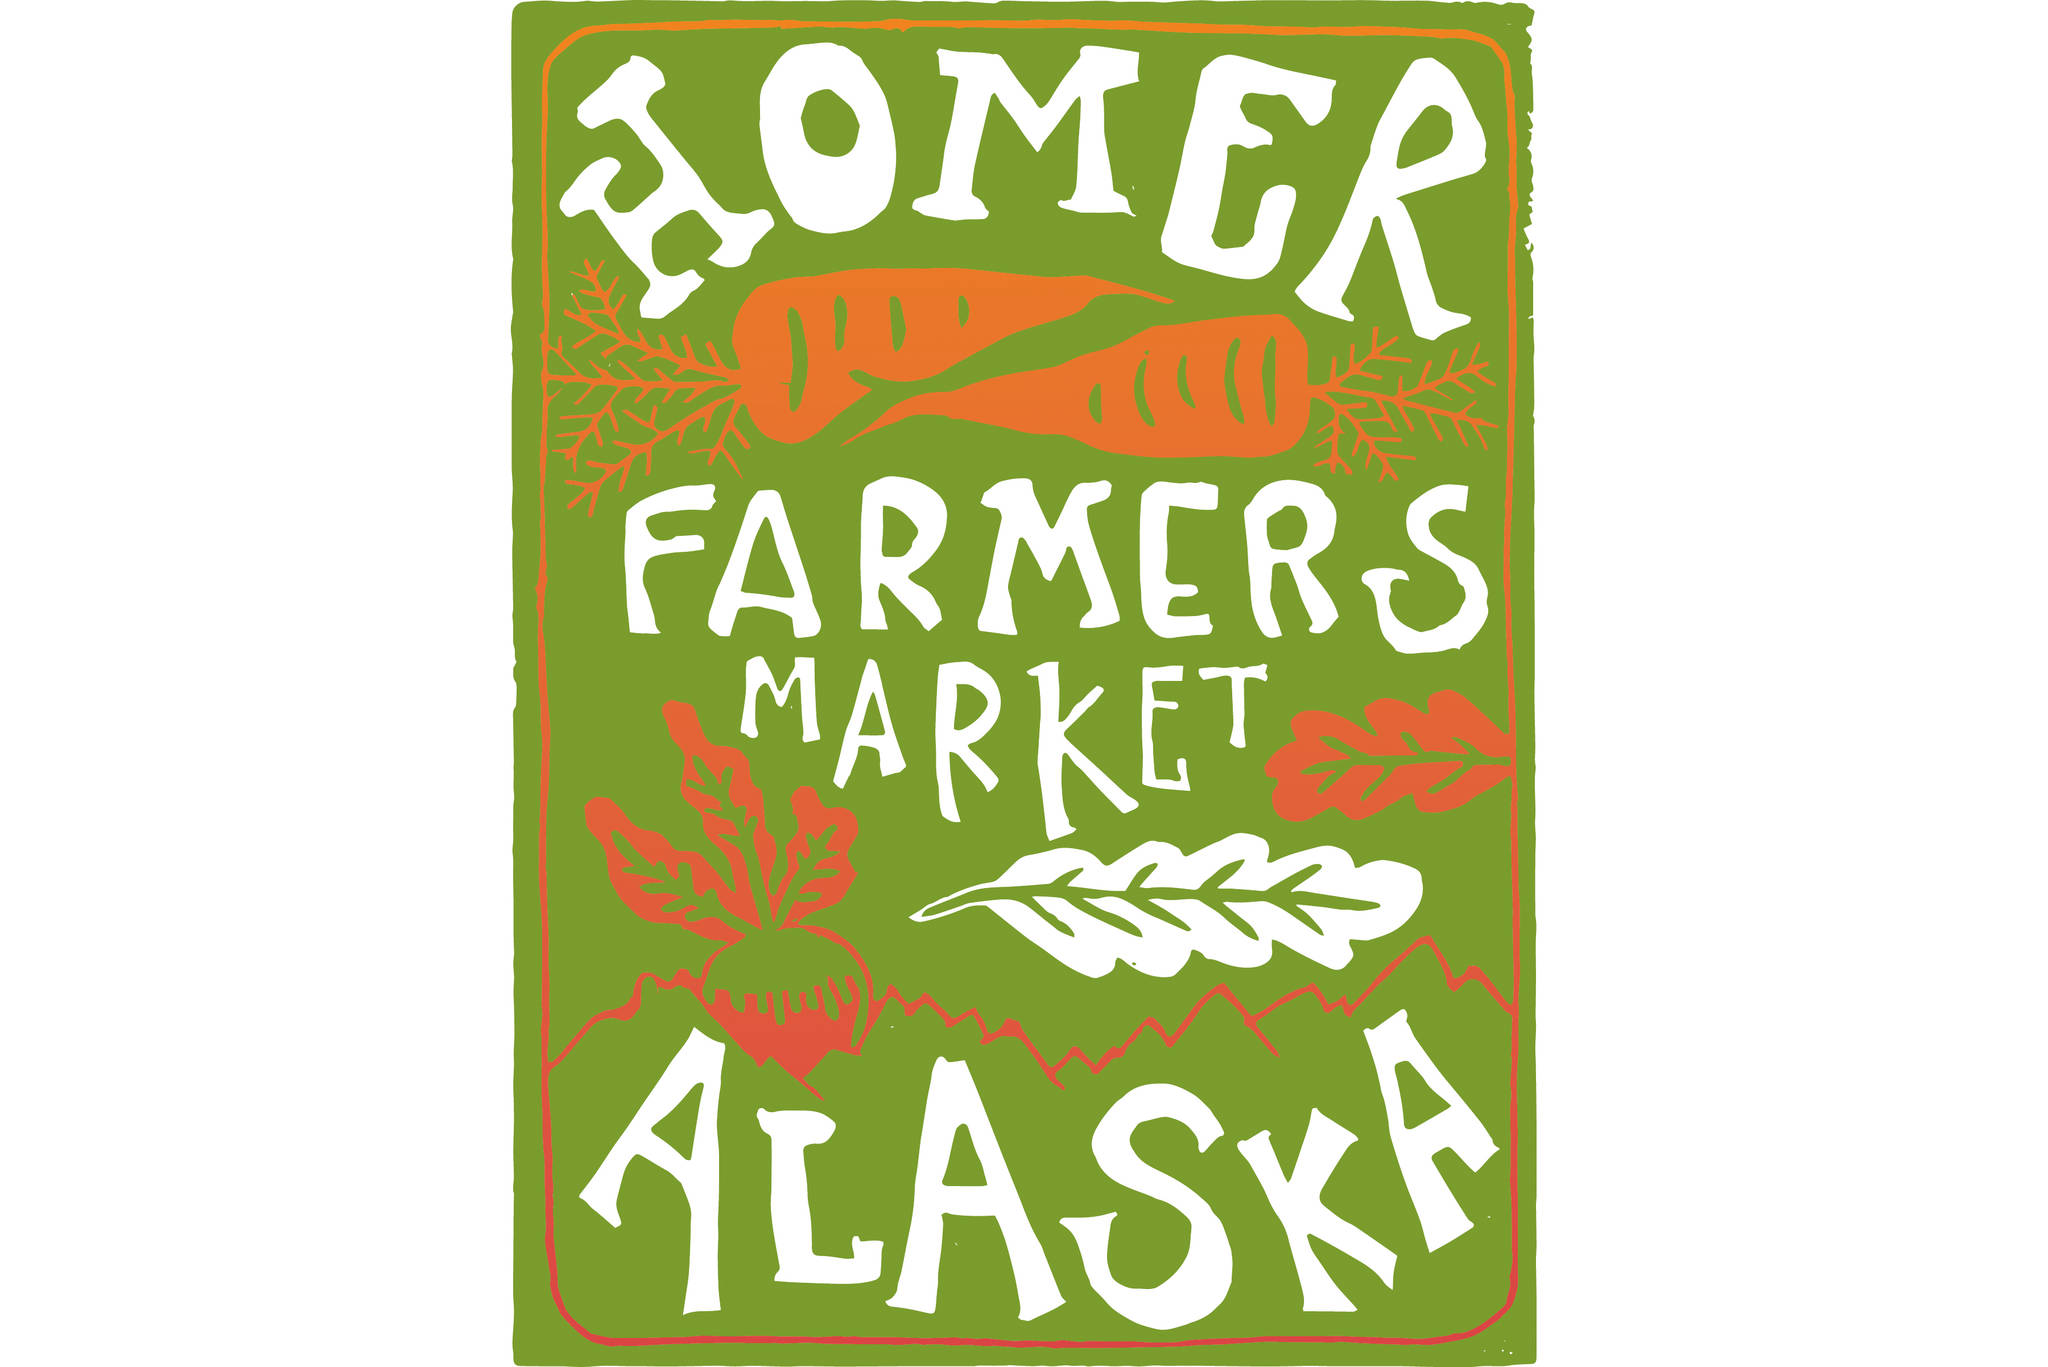 Homer Farmers Market: Surprises await at Market